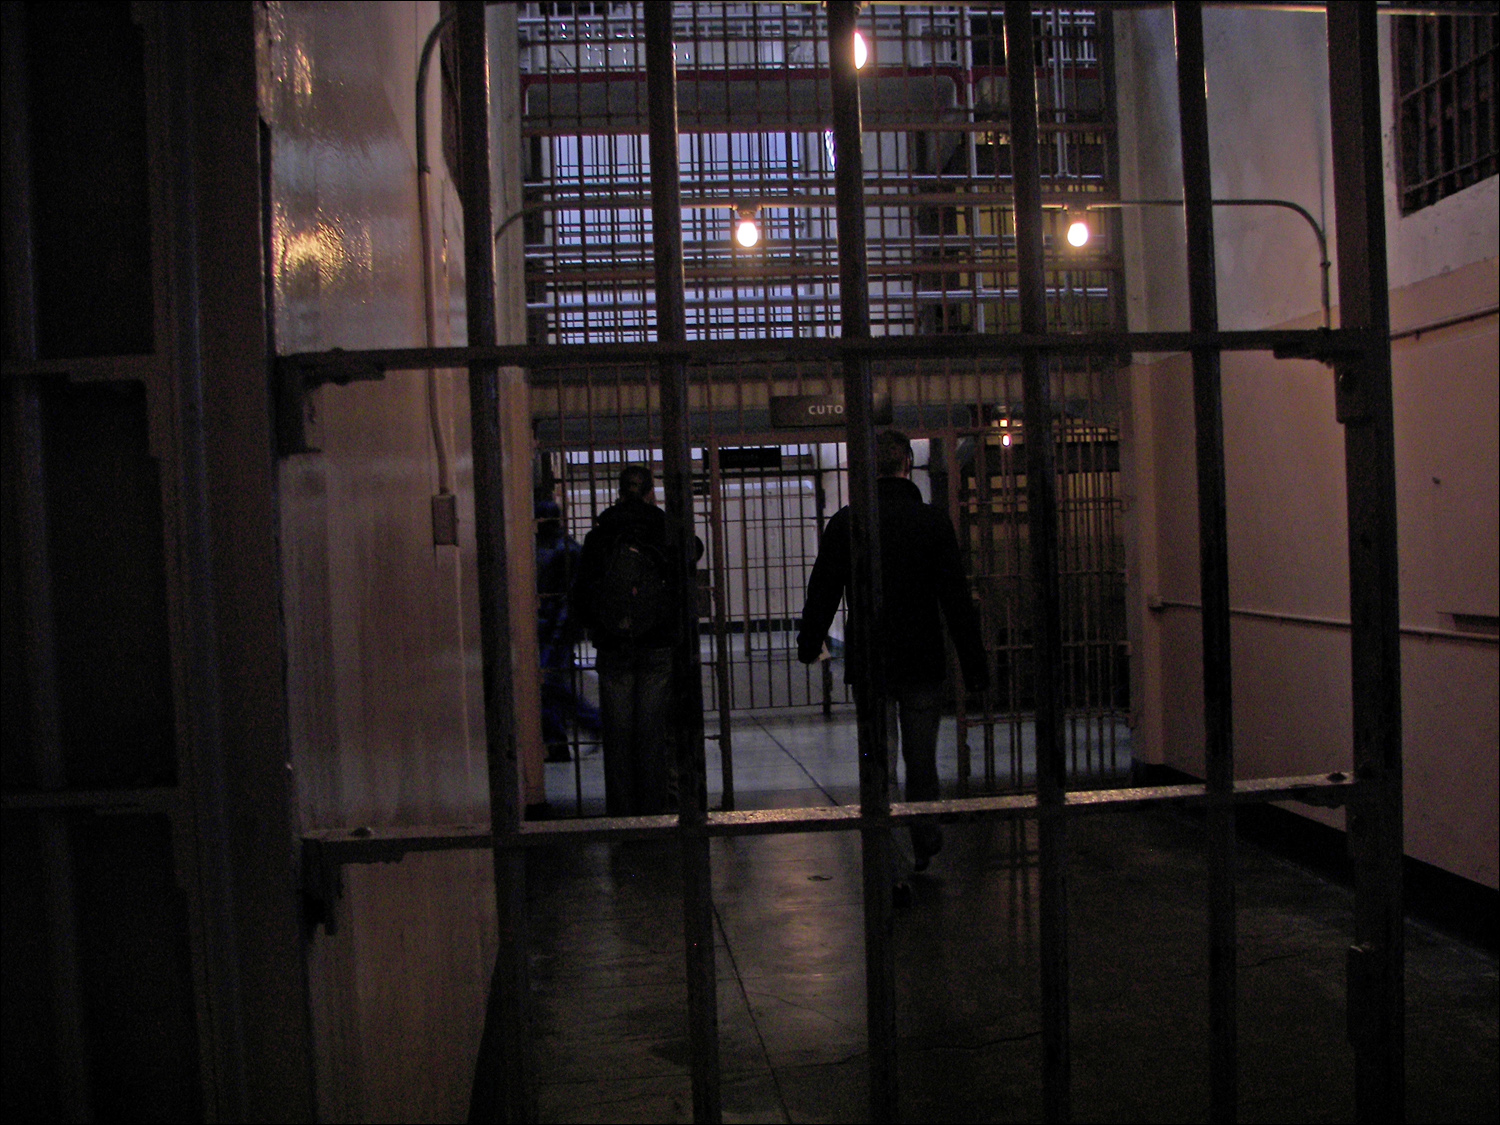 Inside the prison-